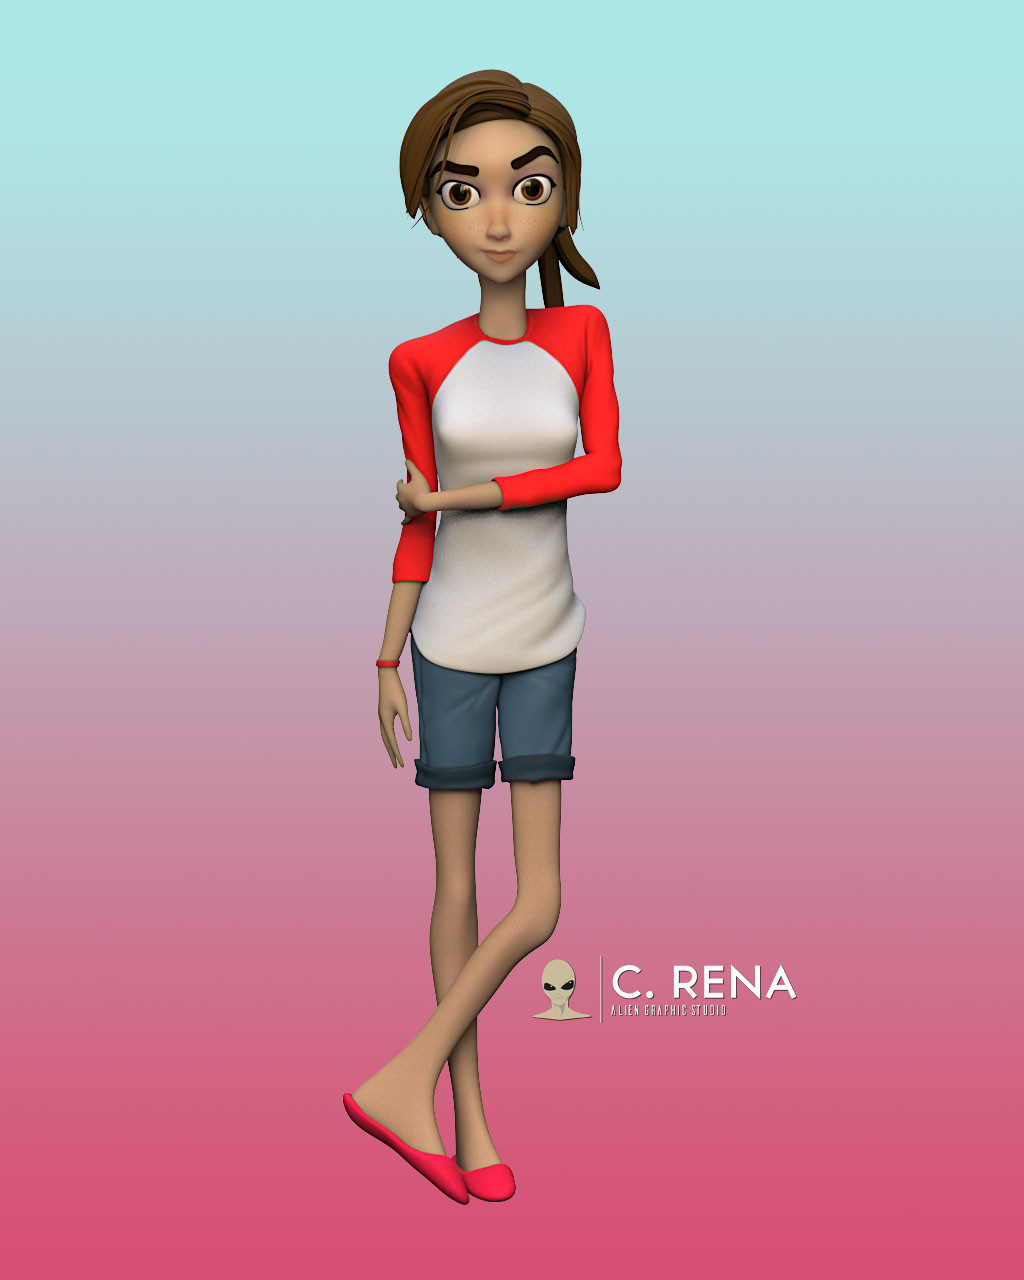 "Melinda" Final Keyshot render with gradient background in Ps